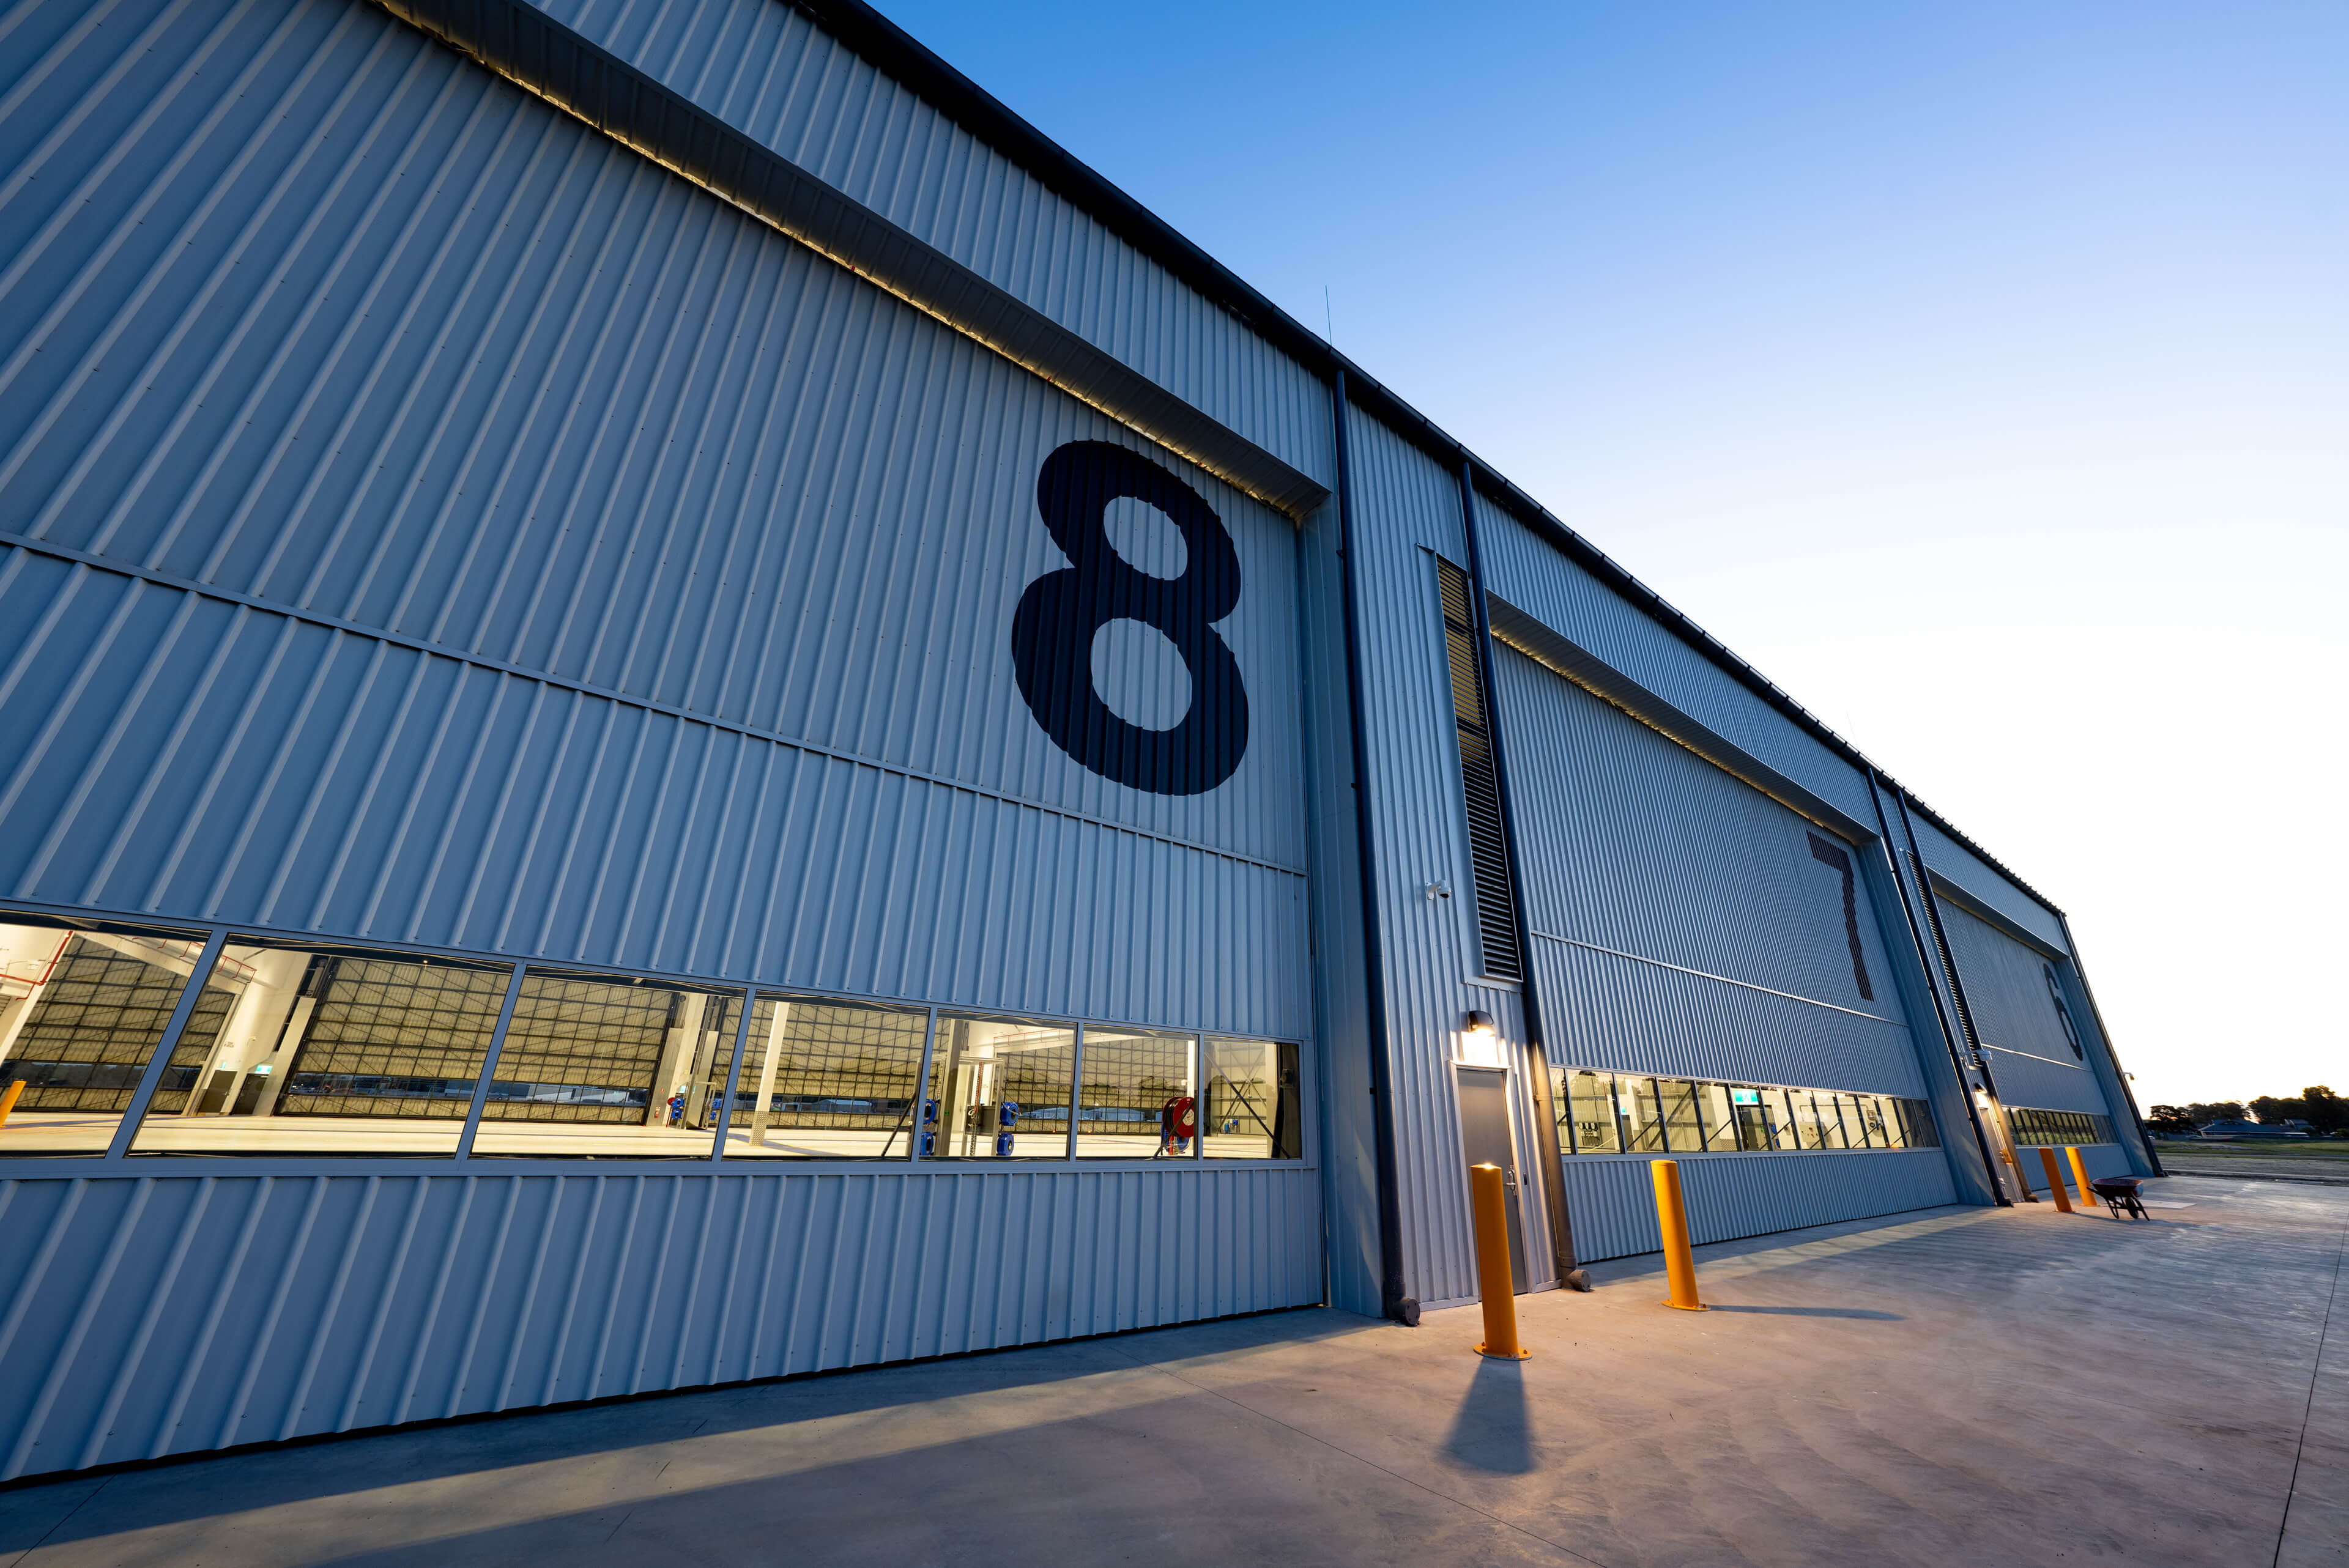 6 view of hangars 8 to 6 of purpose built integrated facility at polair facility bankstown taylor construction refurbishment and live environments